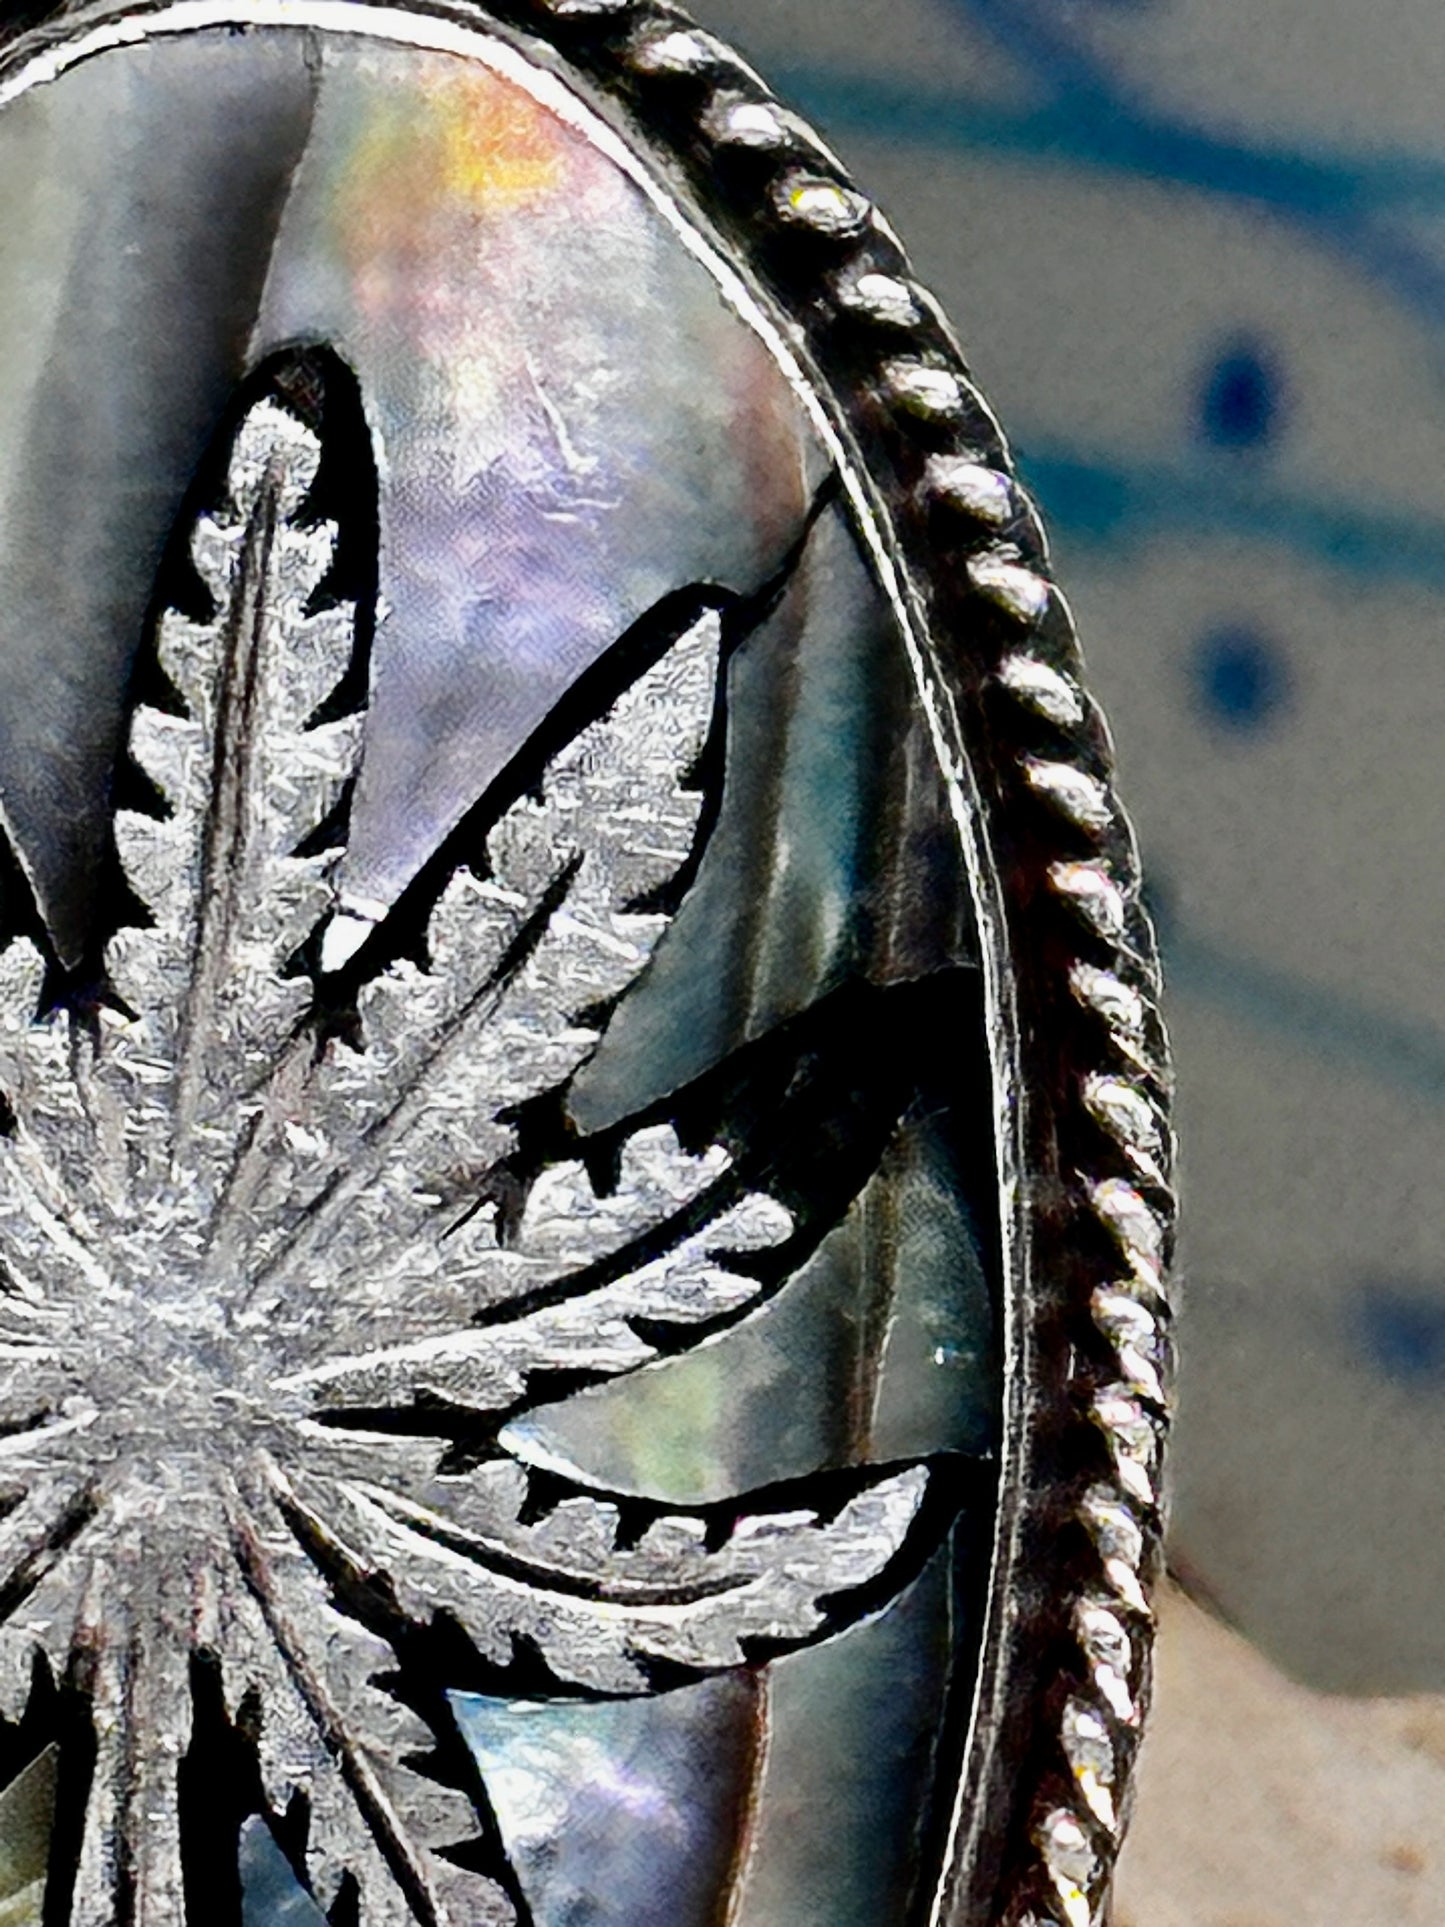 Marijuana ring long abalone leaf size 5 size sterling silver southwestern  women